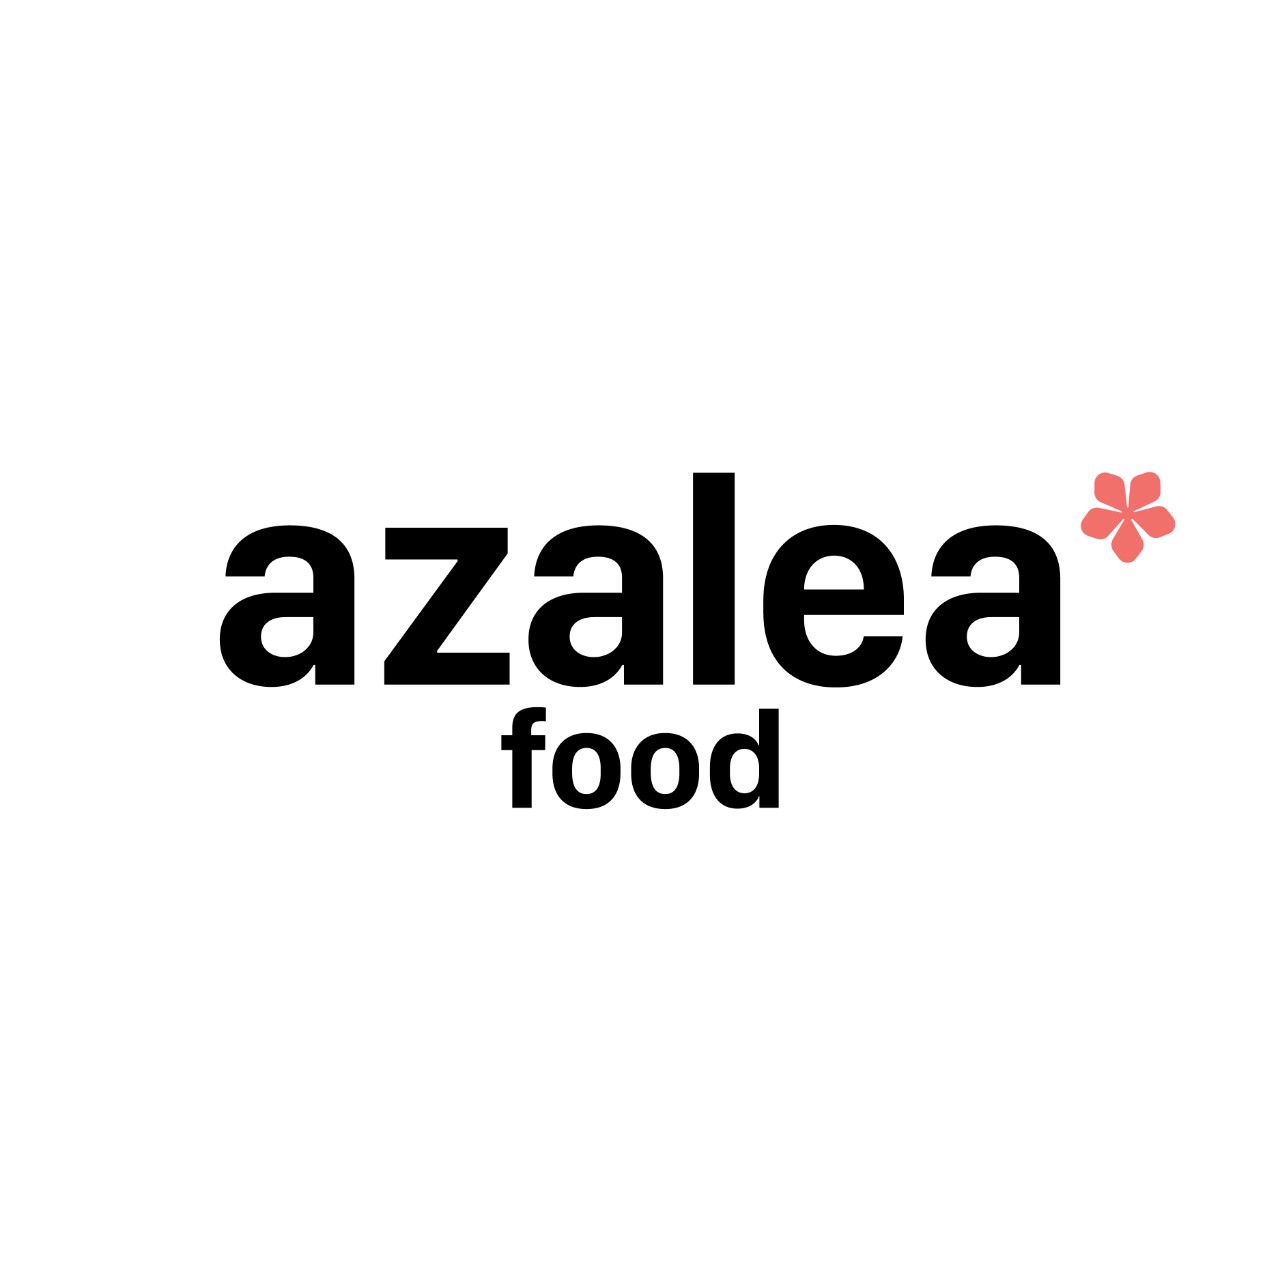 azalea food